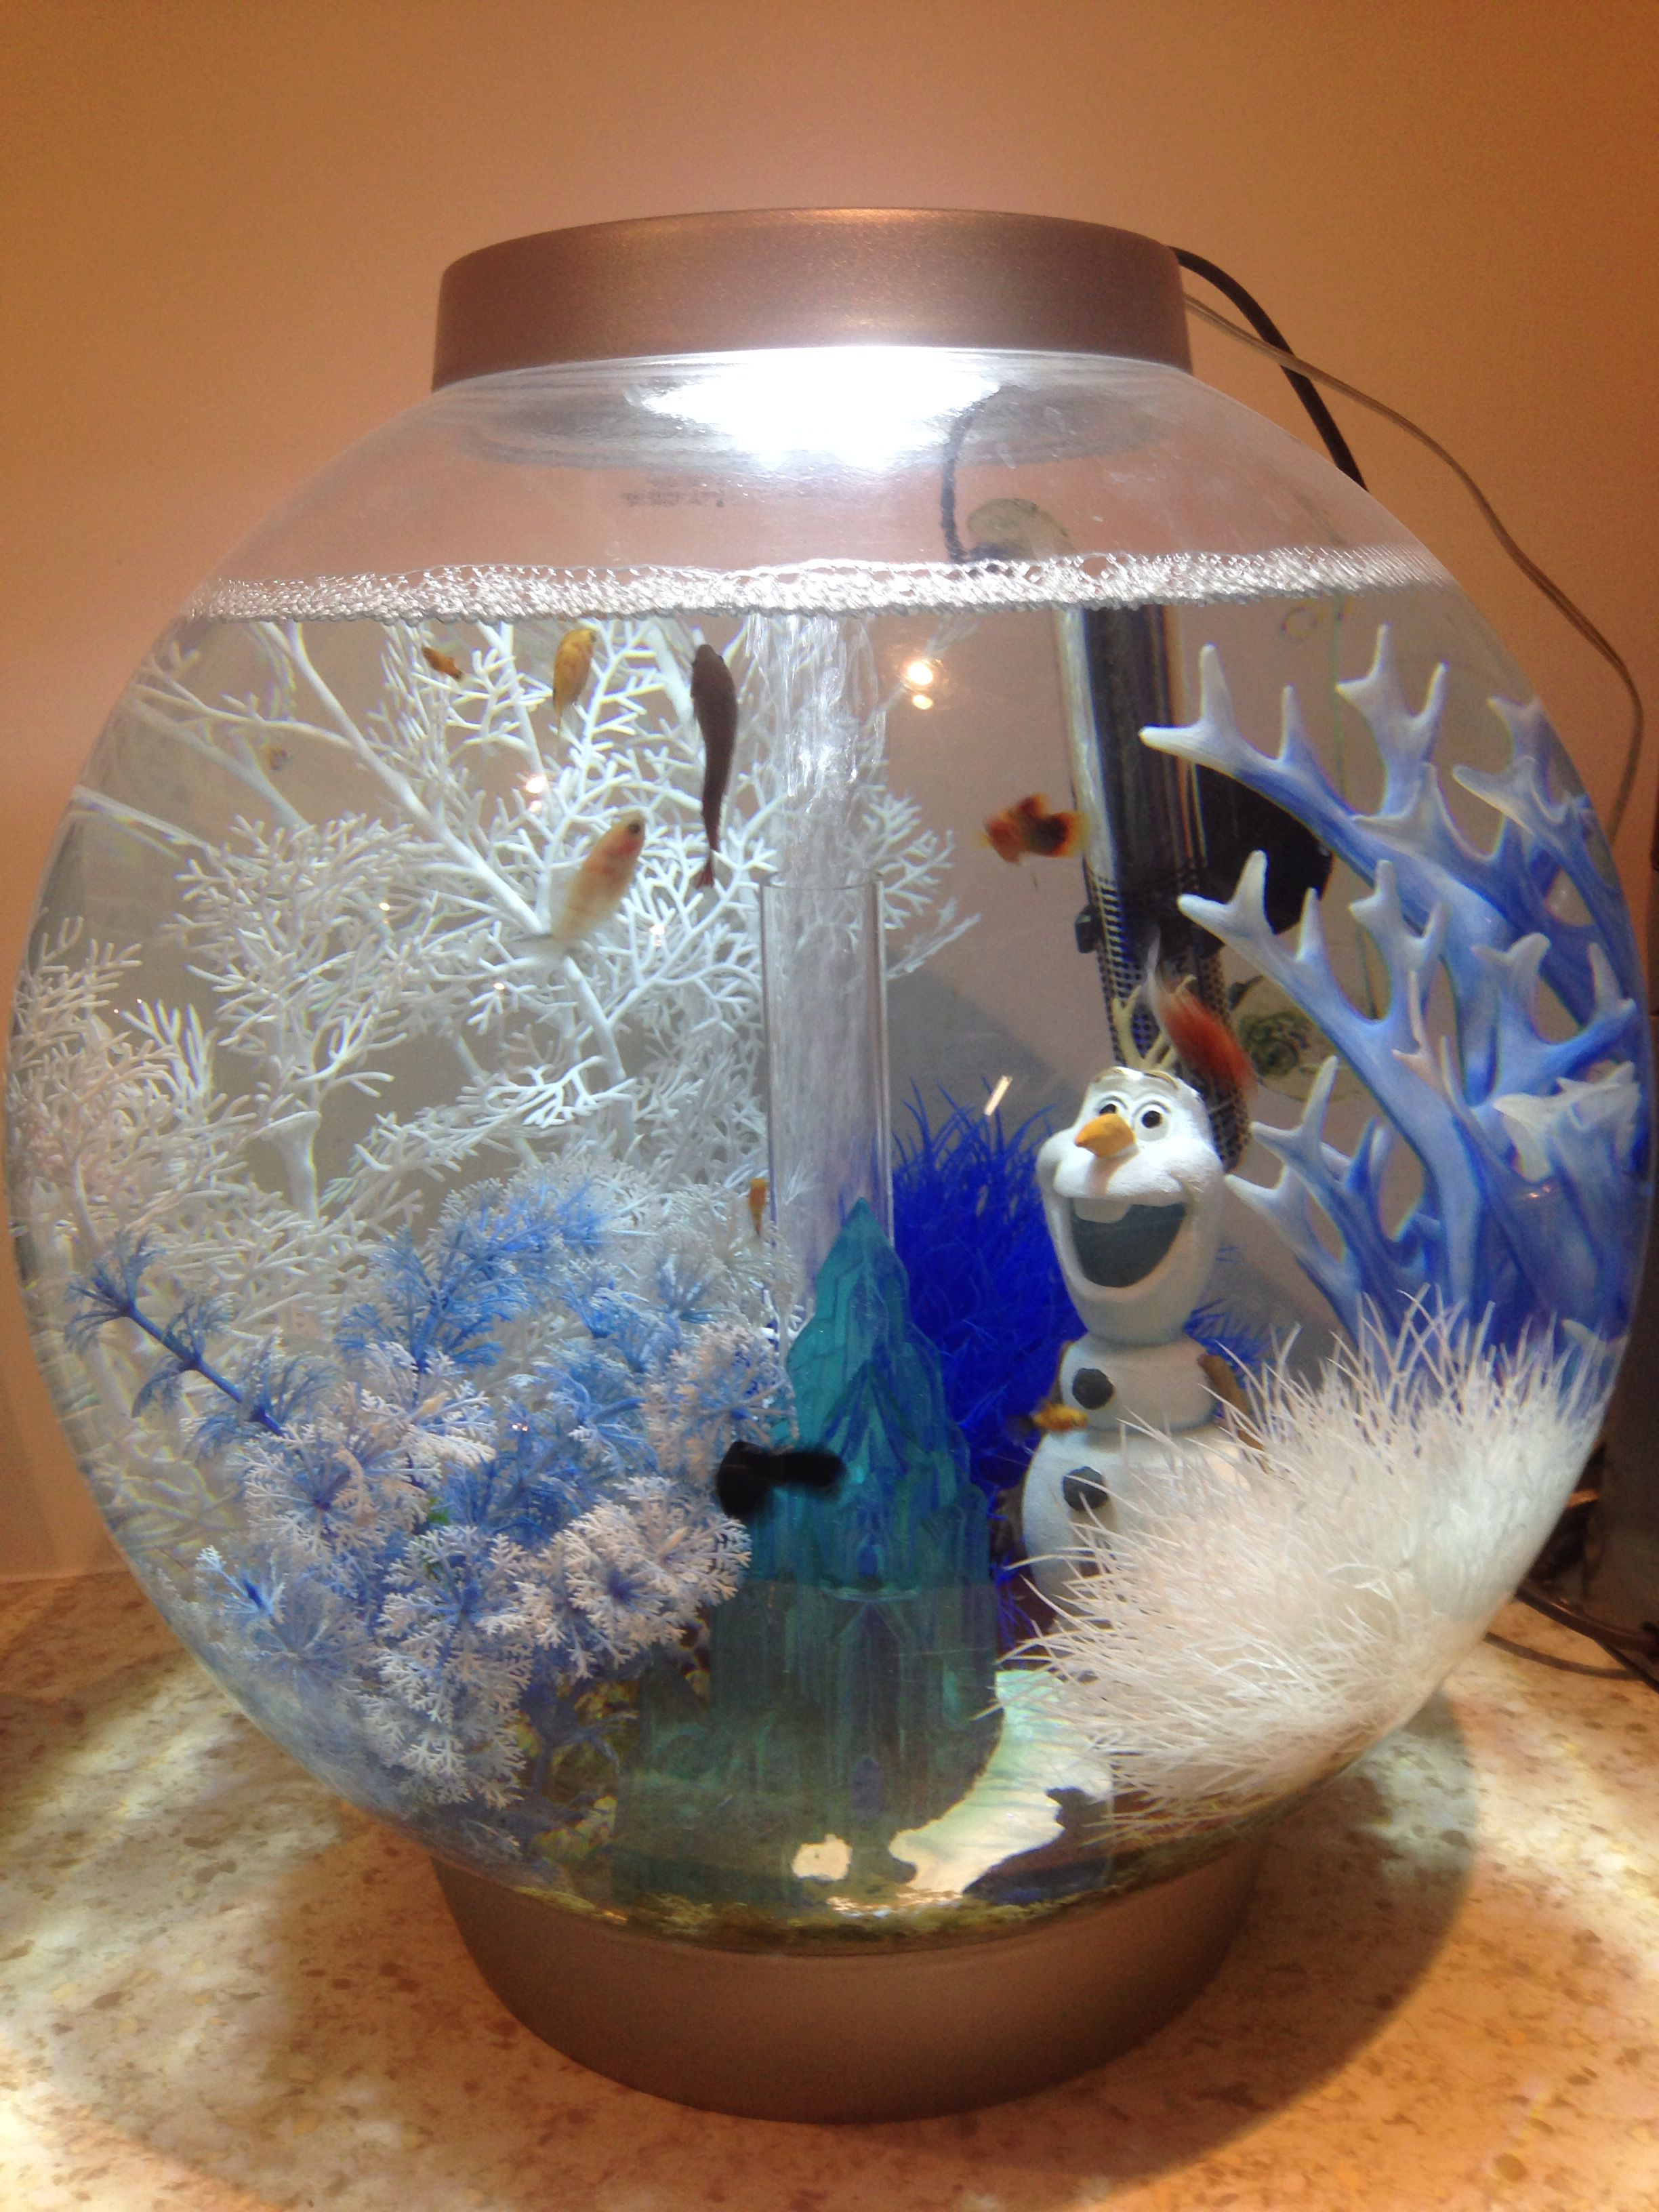 Aquarium Christmas Decor
 Reef biorb with Disney Frozen ornaments a Christmas fish